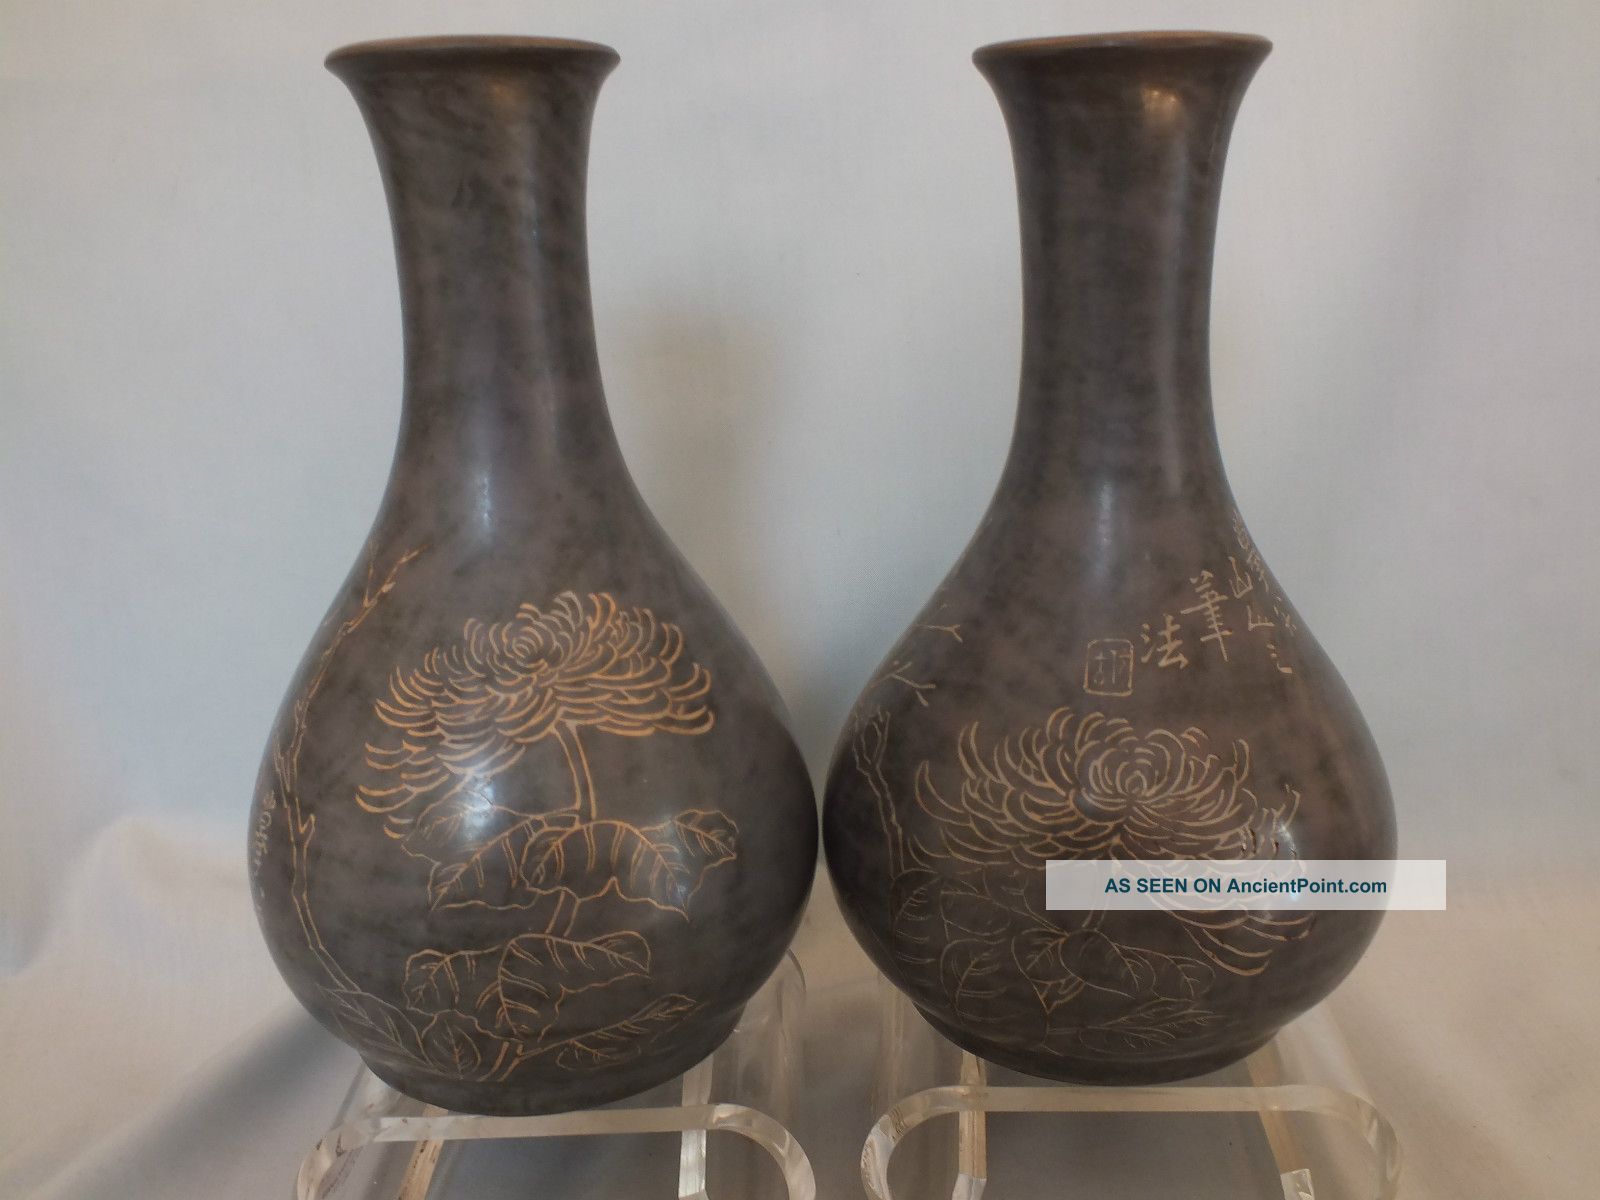 Pr Japanese Pottery Slip Glazed Vases With Incised Floral & Script Decor 20thc Vases photo